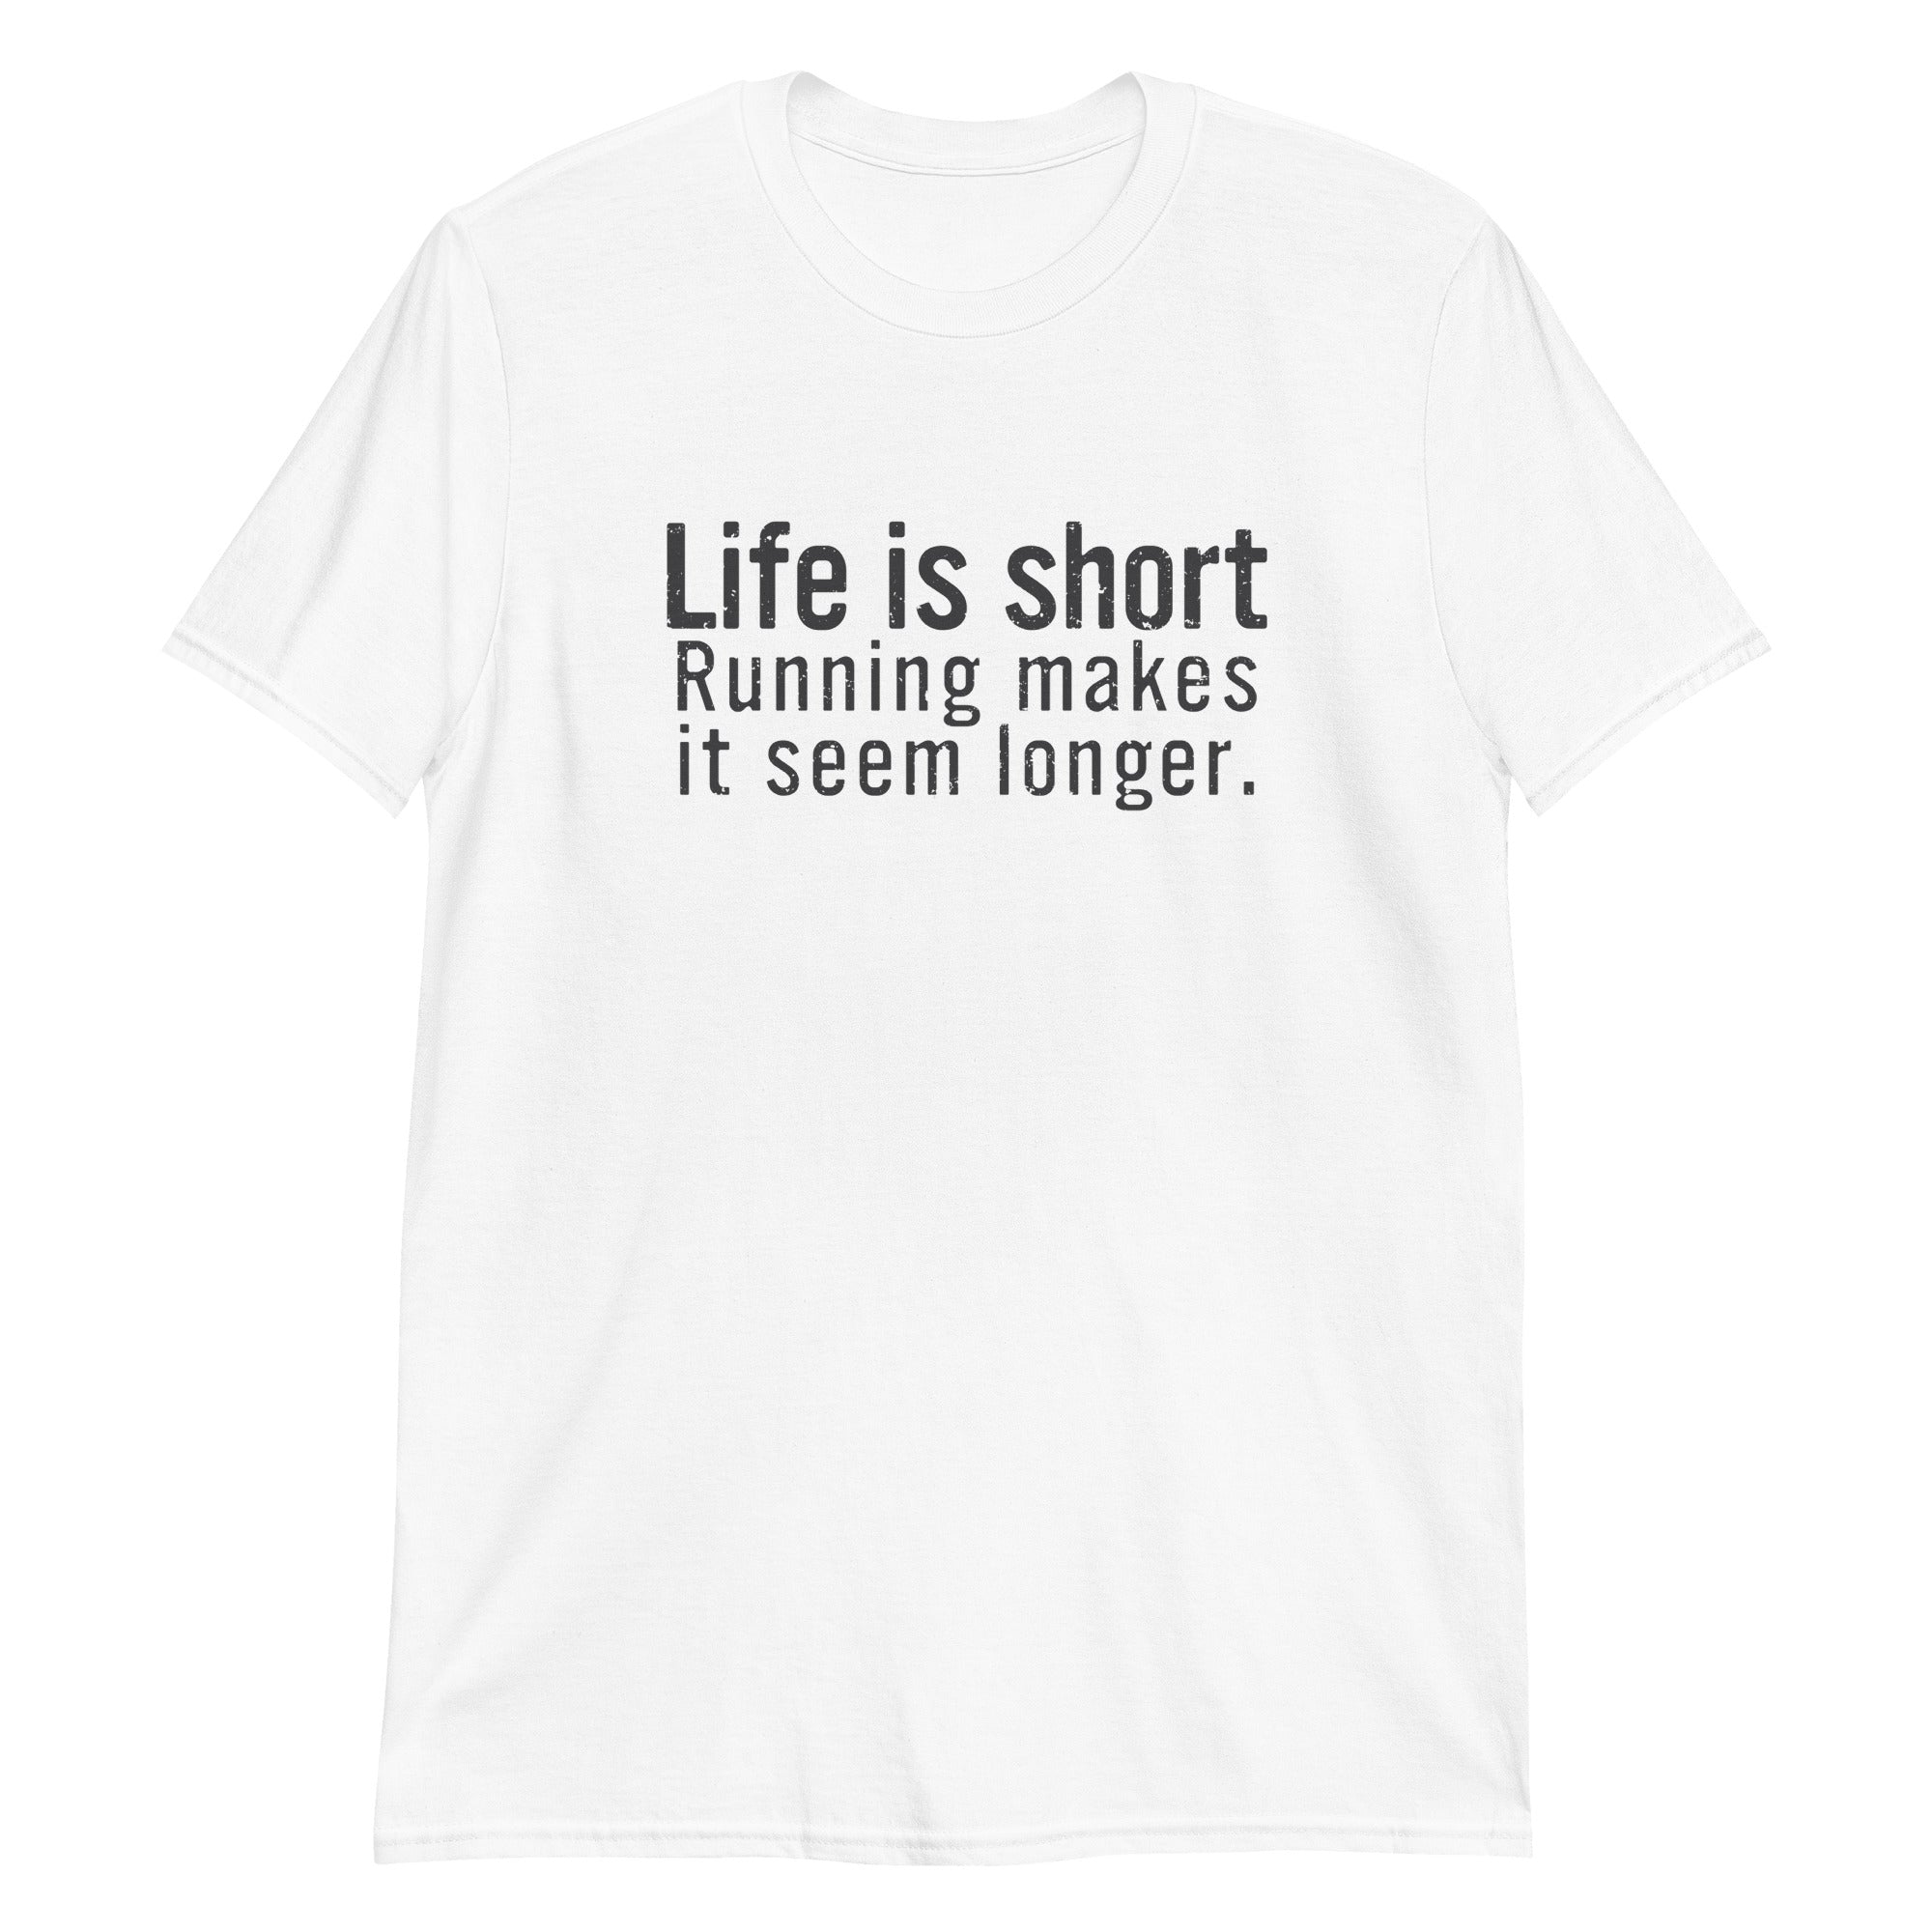 Life is short. Running makes it seem longer